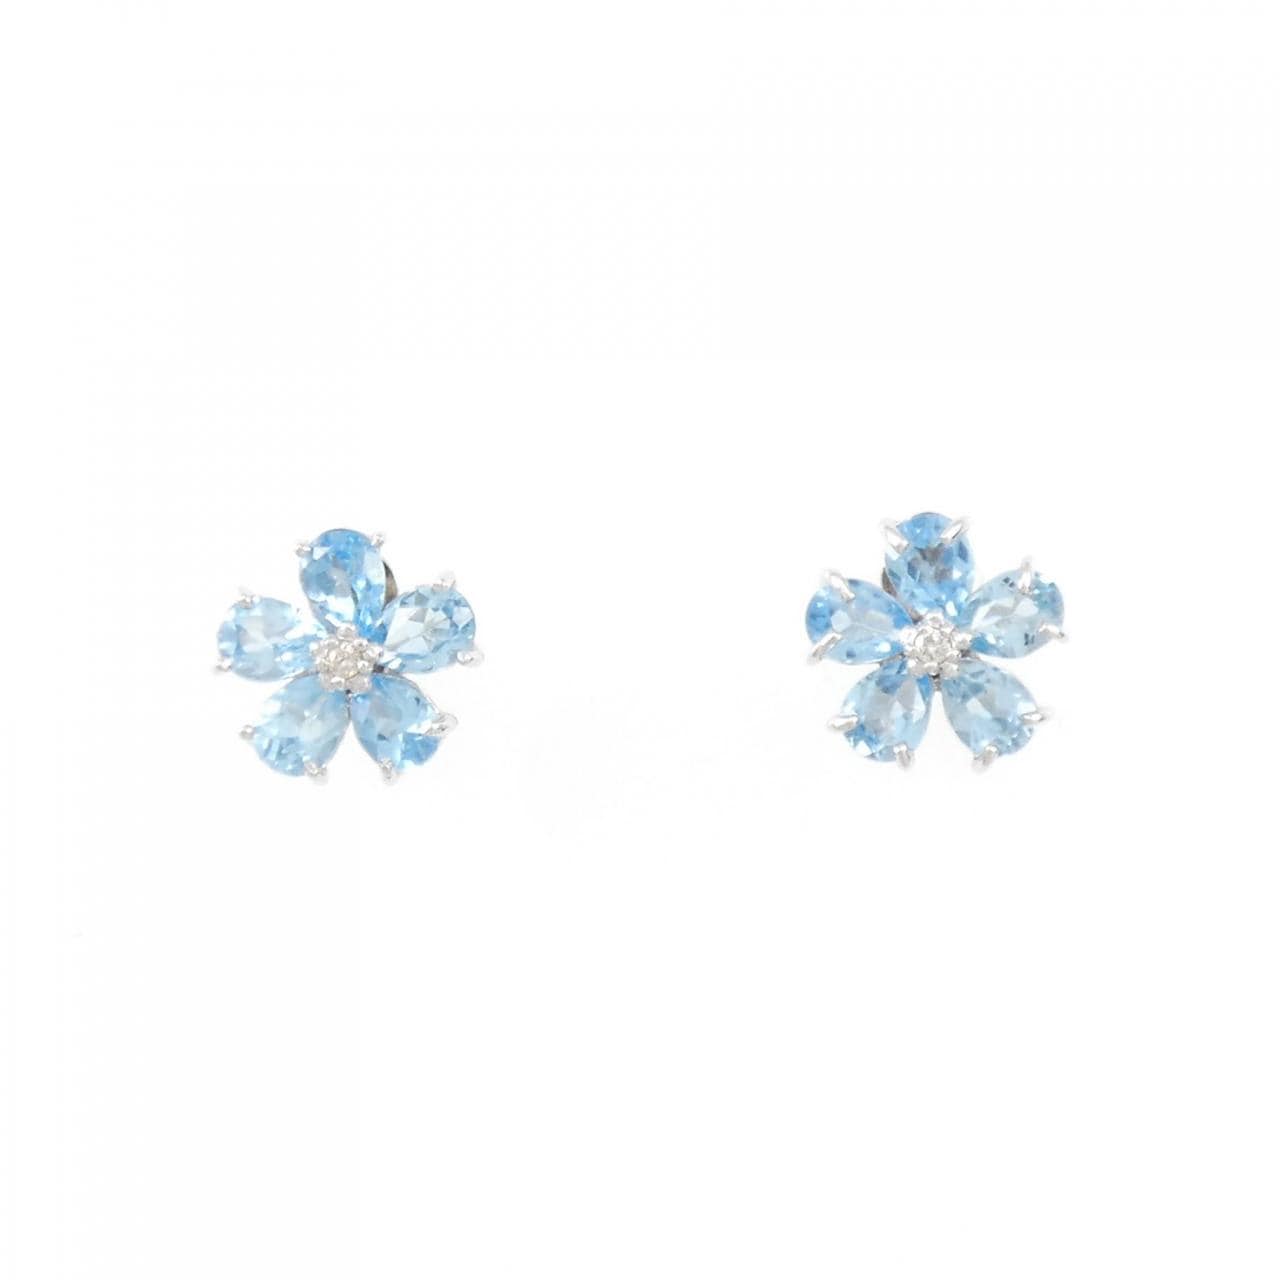 K18WG/K14WG flower blue Topaz earrings